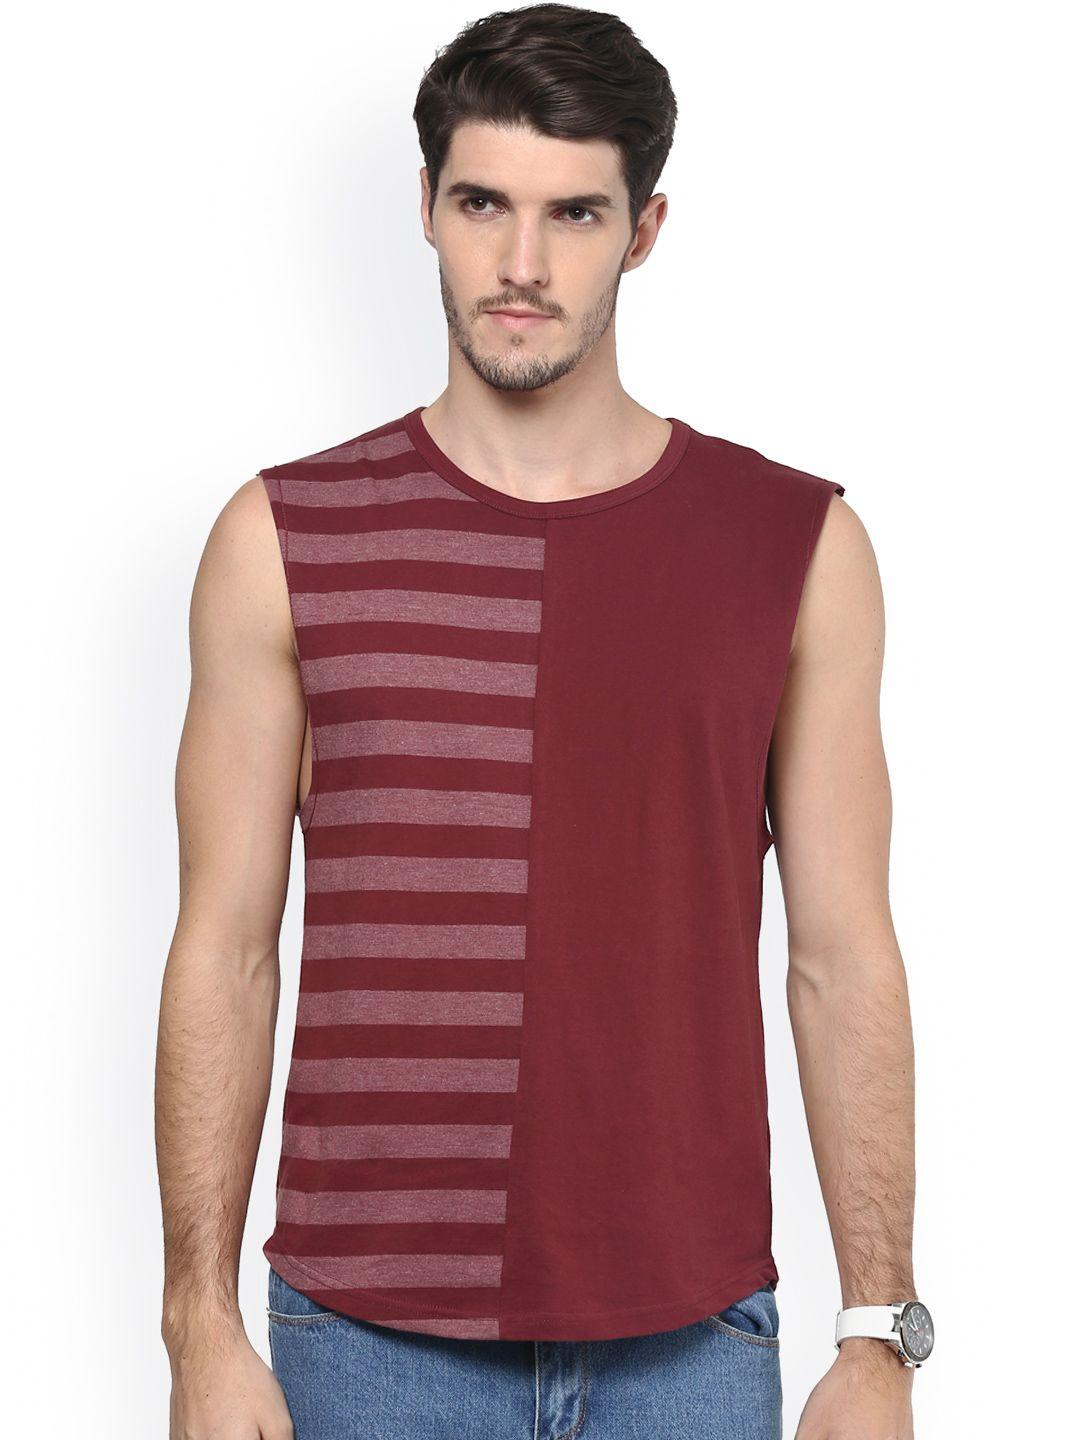 hypernation maroon striped sleeveless pure cotton t-shirt